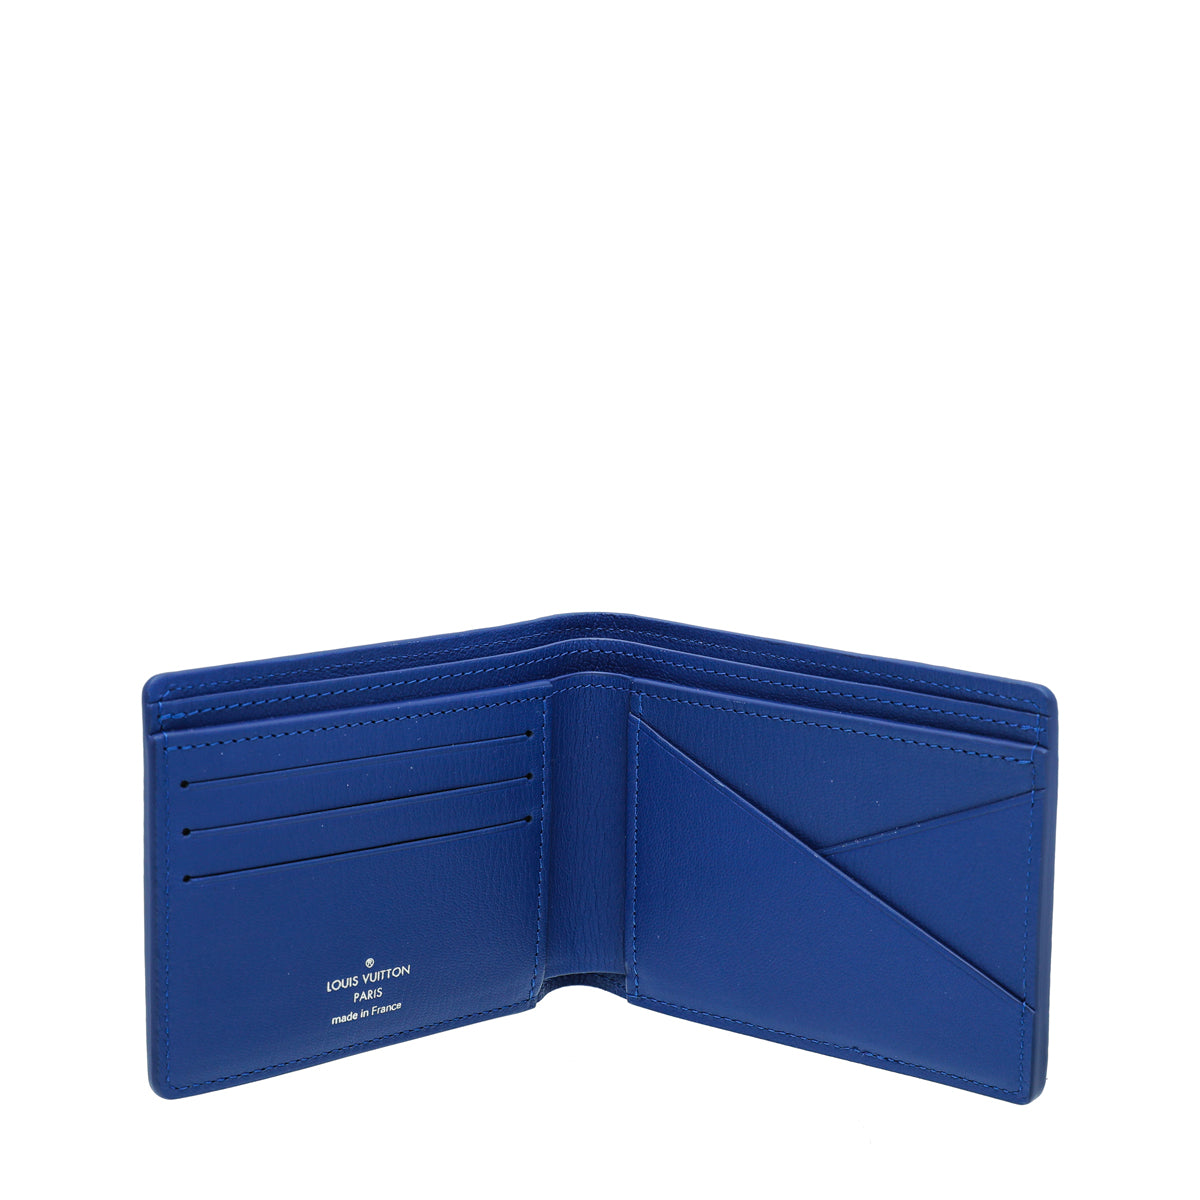 Unboxing Louis Vuitton New Arrival Celeste Wallet in Blue by UN-Rambling 